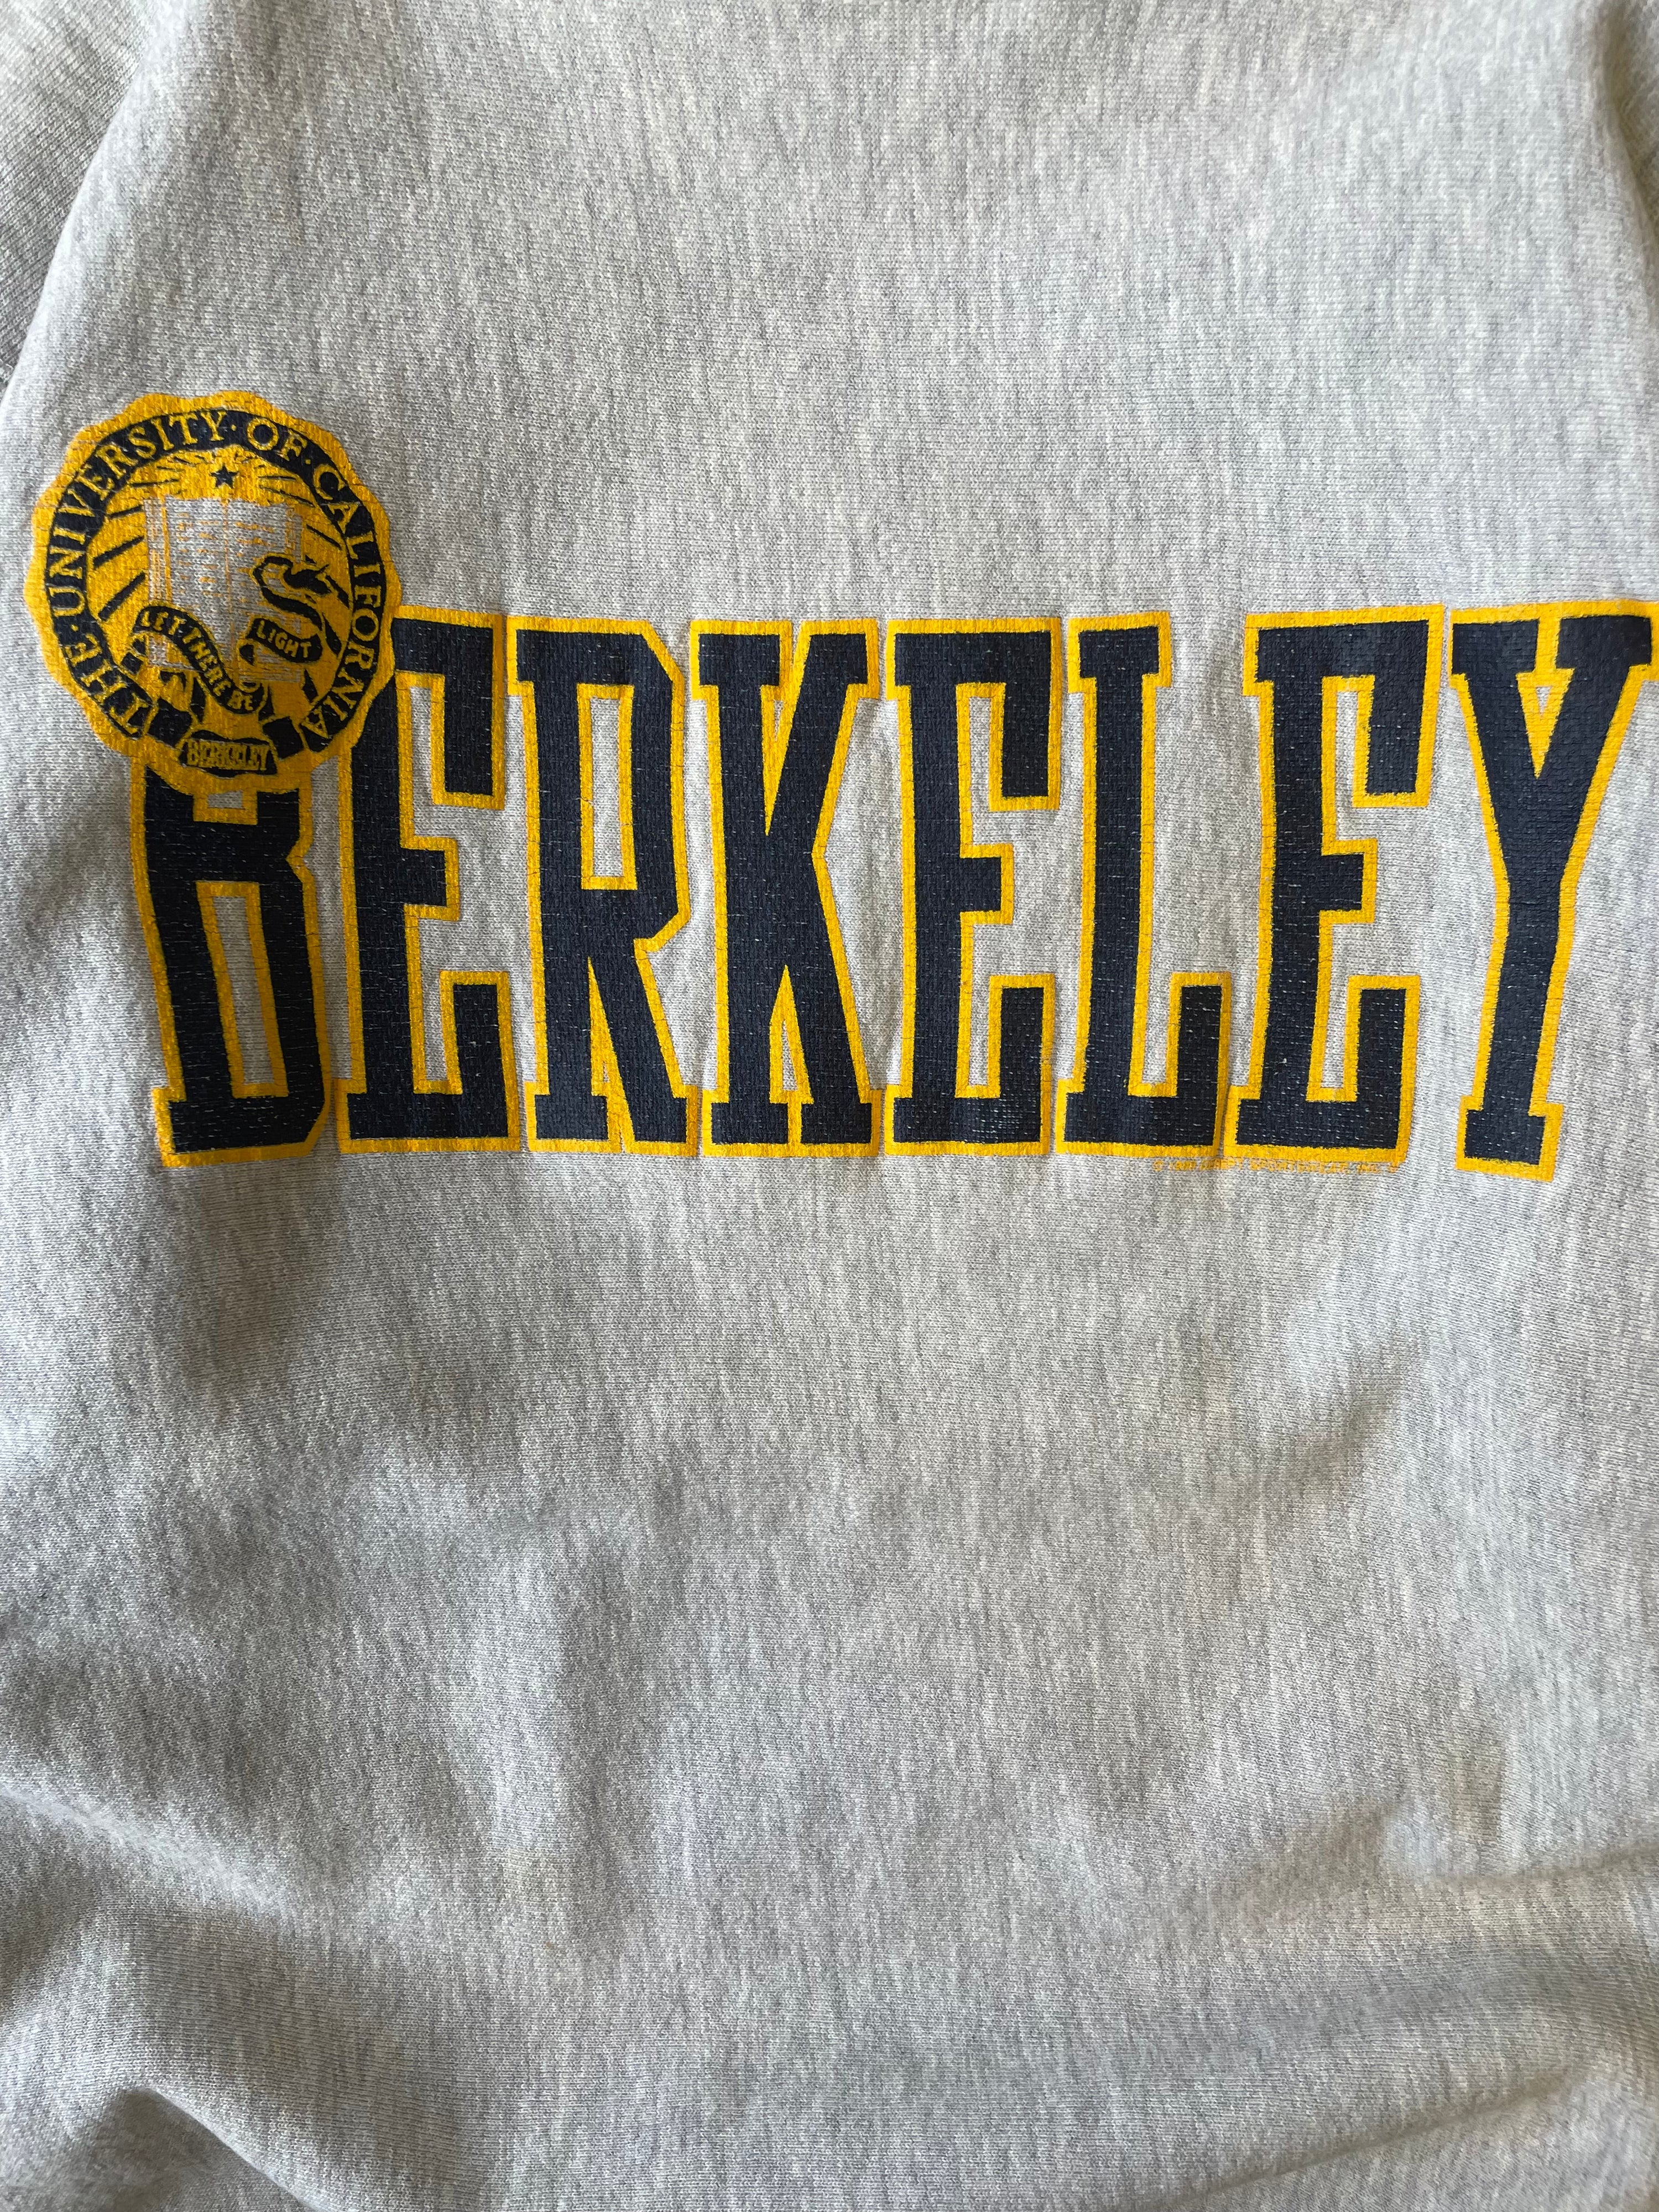 90s University of Berkeley California - Large